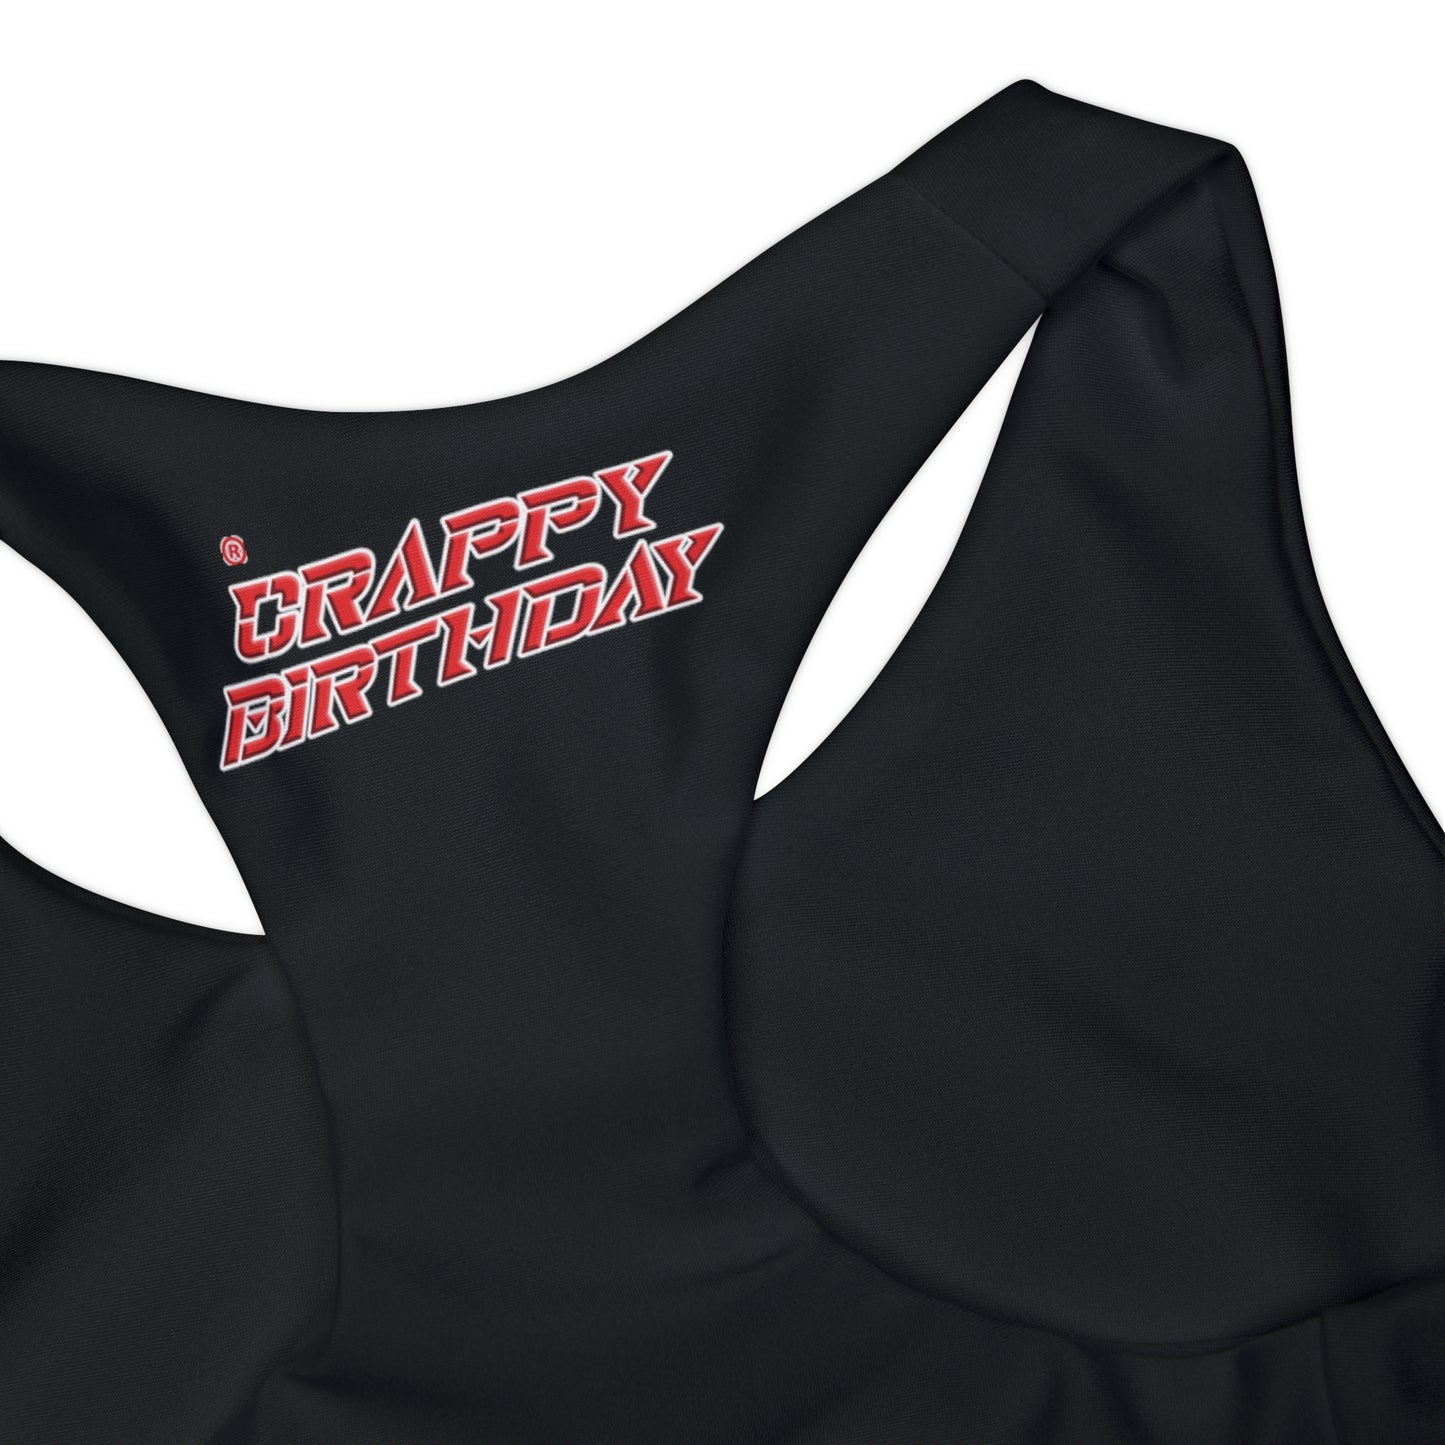 Crappy Birthday II Girls Two Piece Swimsuit